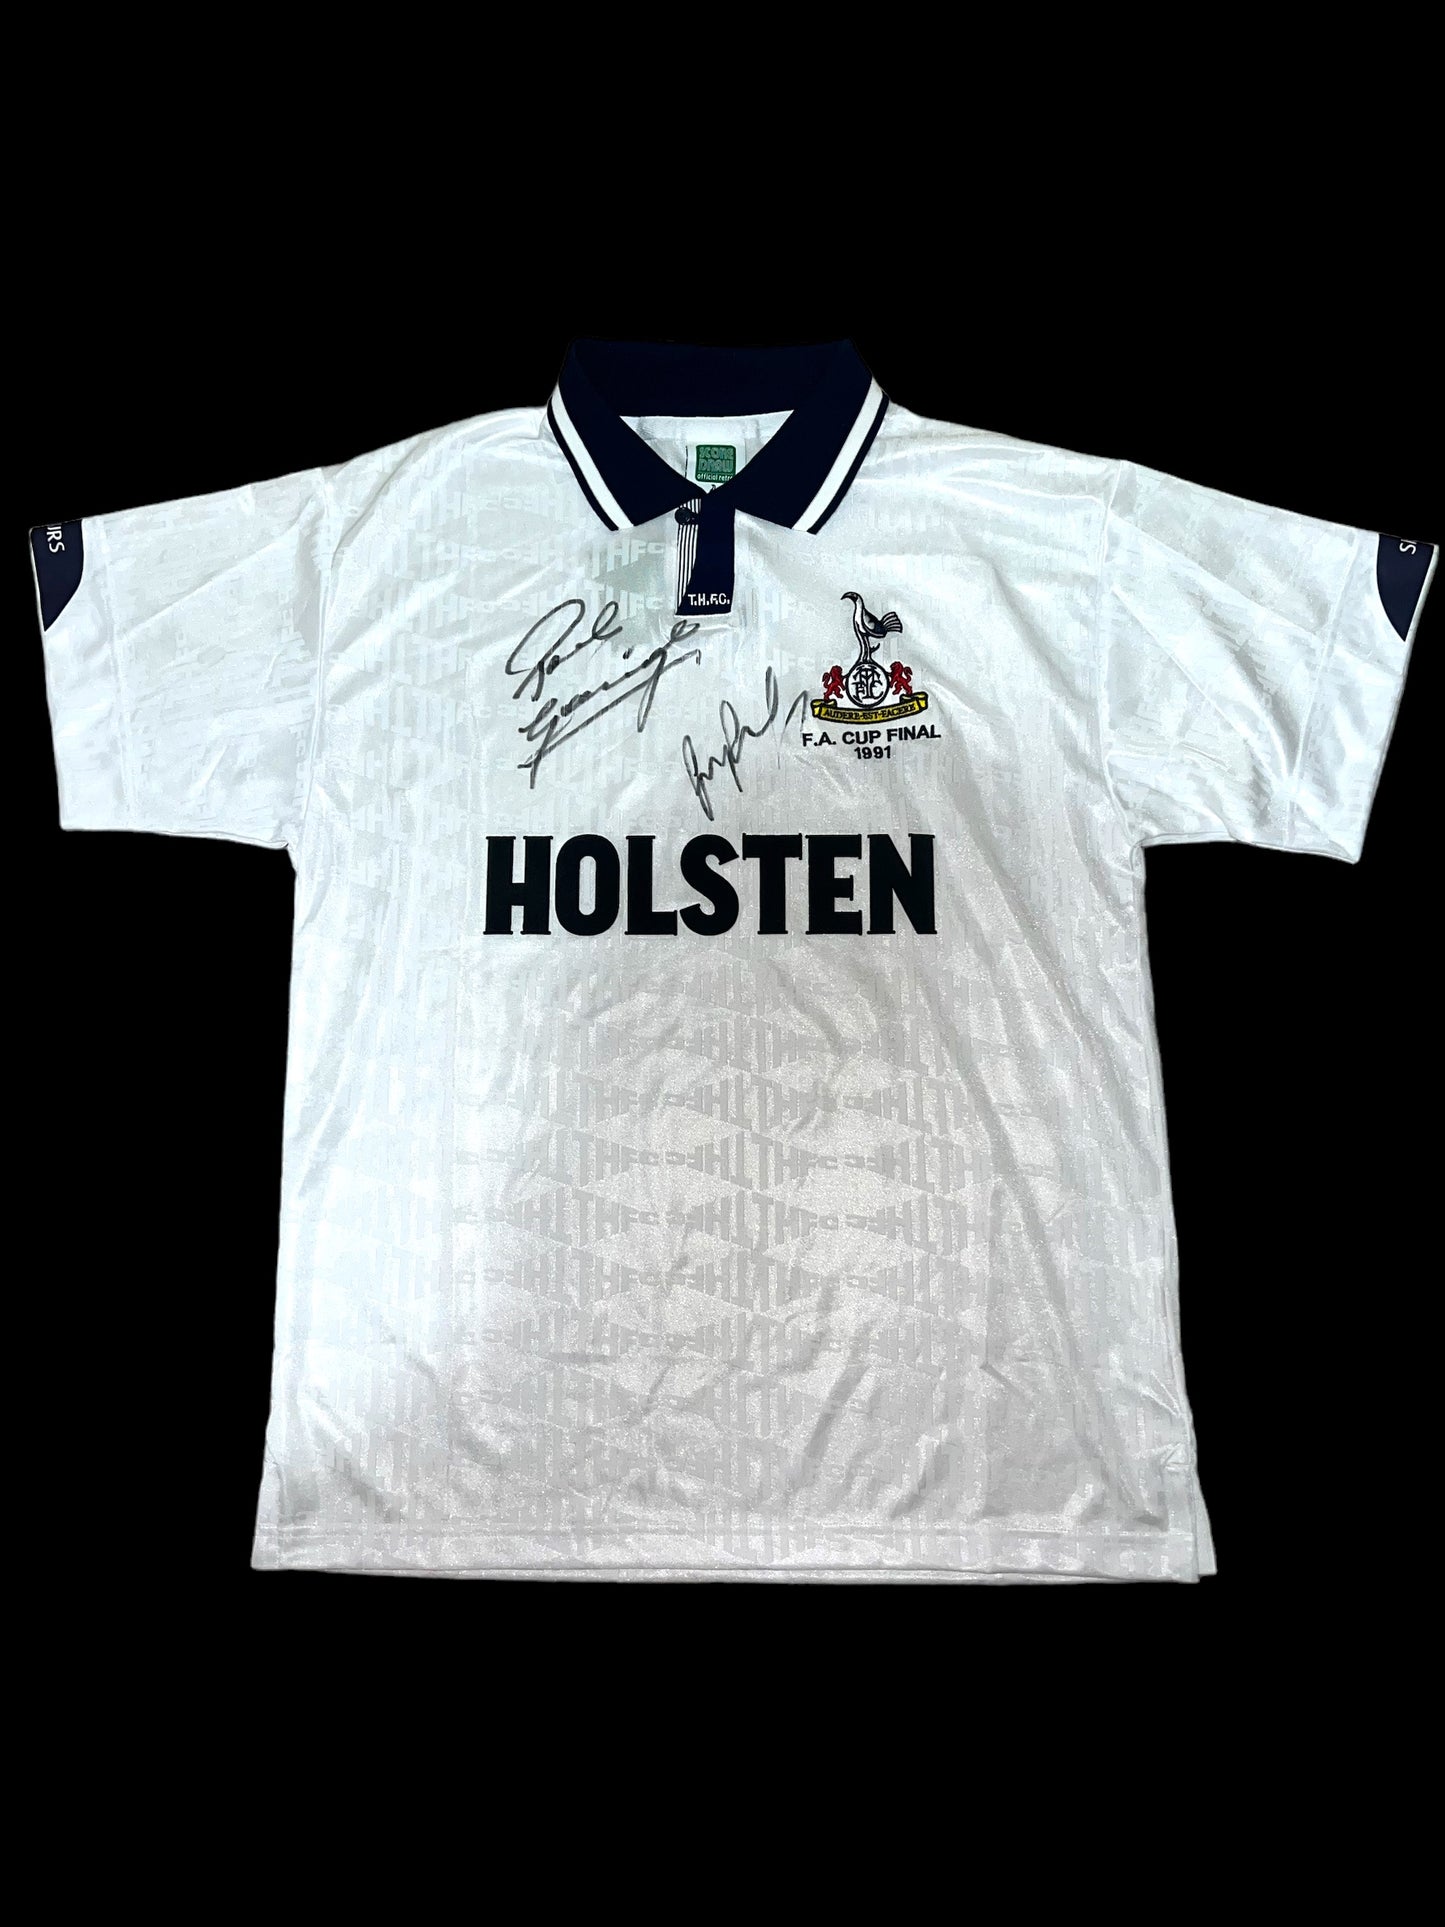 Paul Gascoigne ‘Gazza’ and Gary Lineker Duel Signed Official Score Draw Retro Tottenham 1991 FA Cup Final Shirt